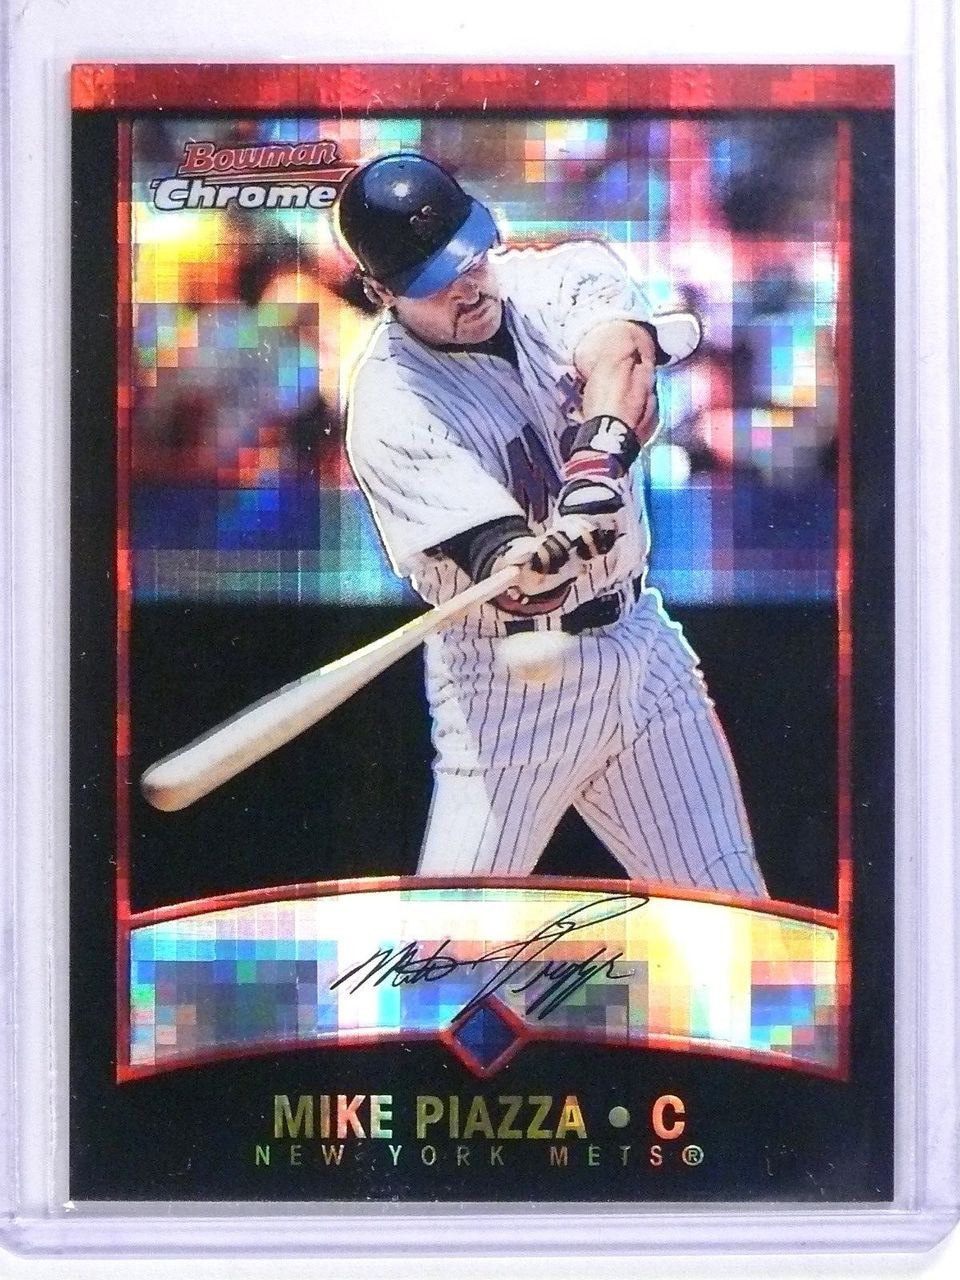 2001 Bowman Chrome Baseball Card #77 Mike Piazza 